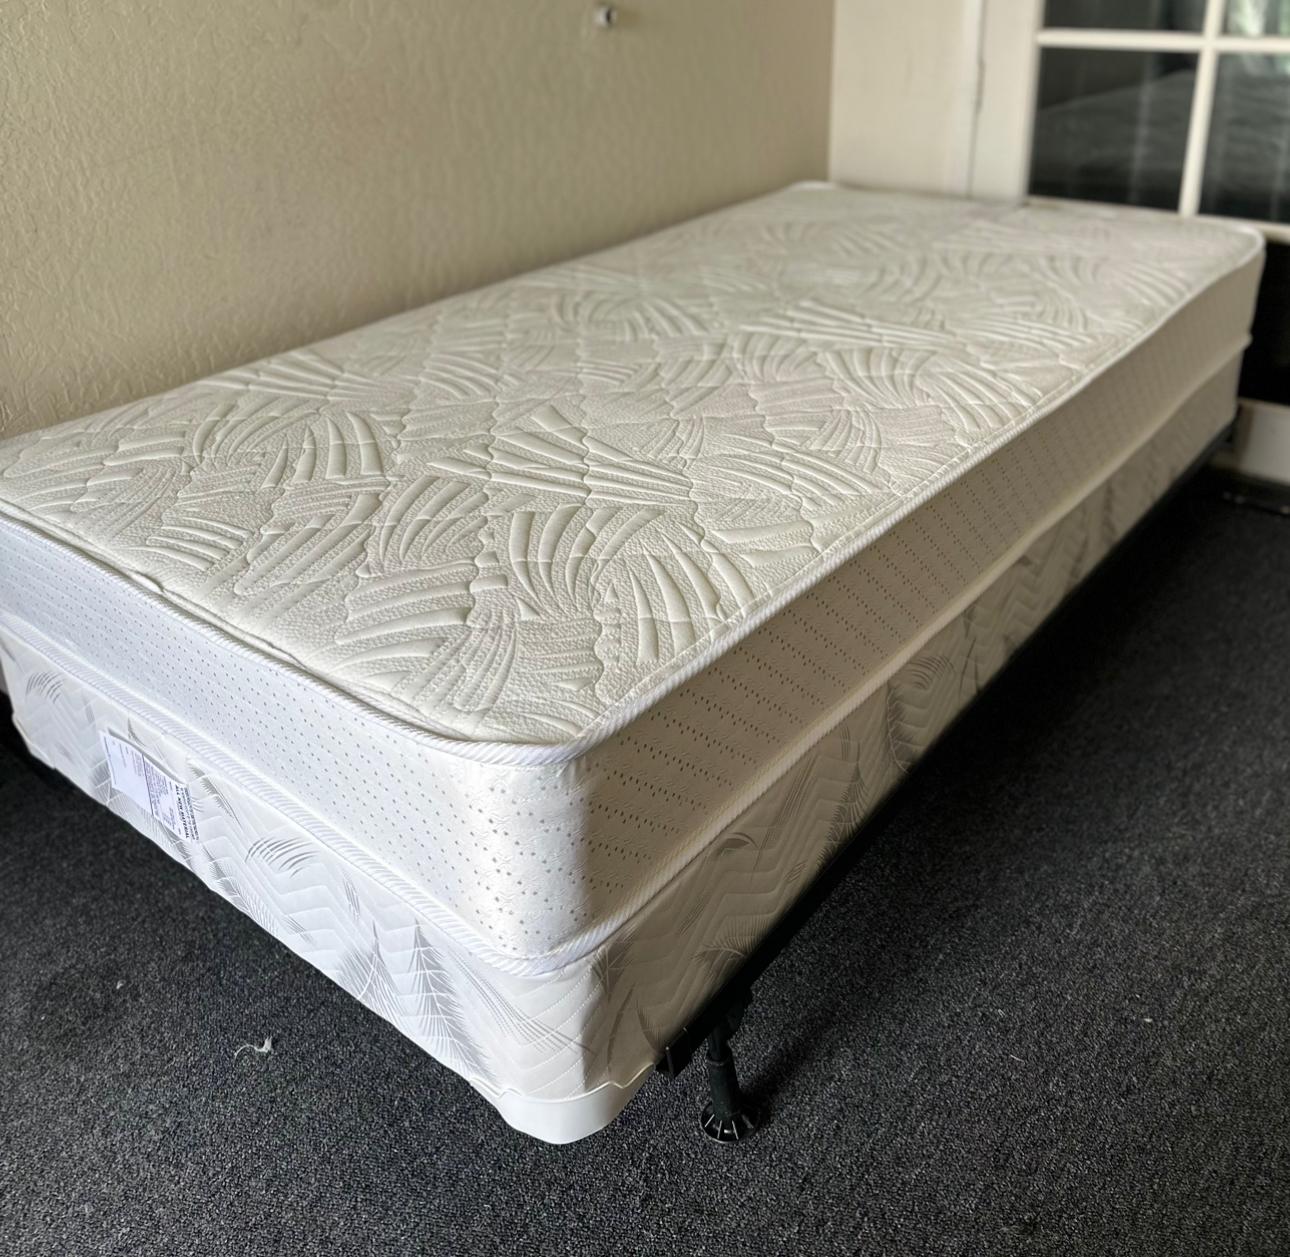 Prelude innerspring 8” mattress